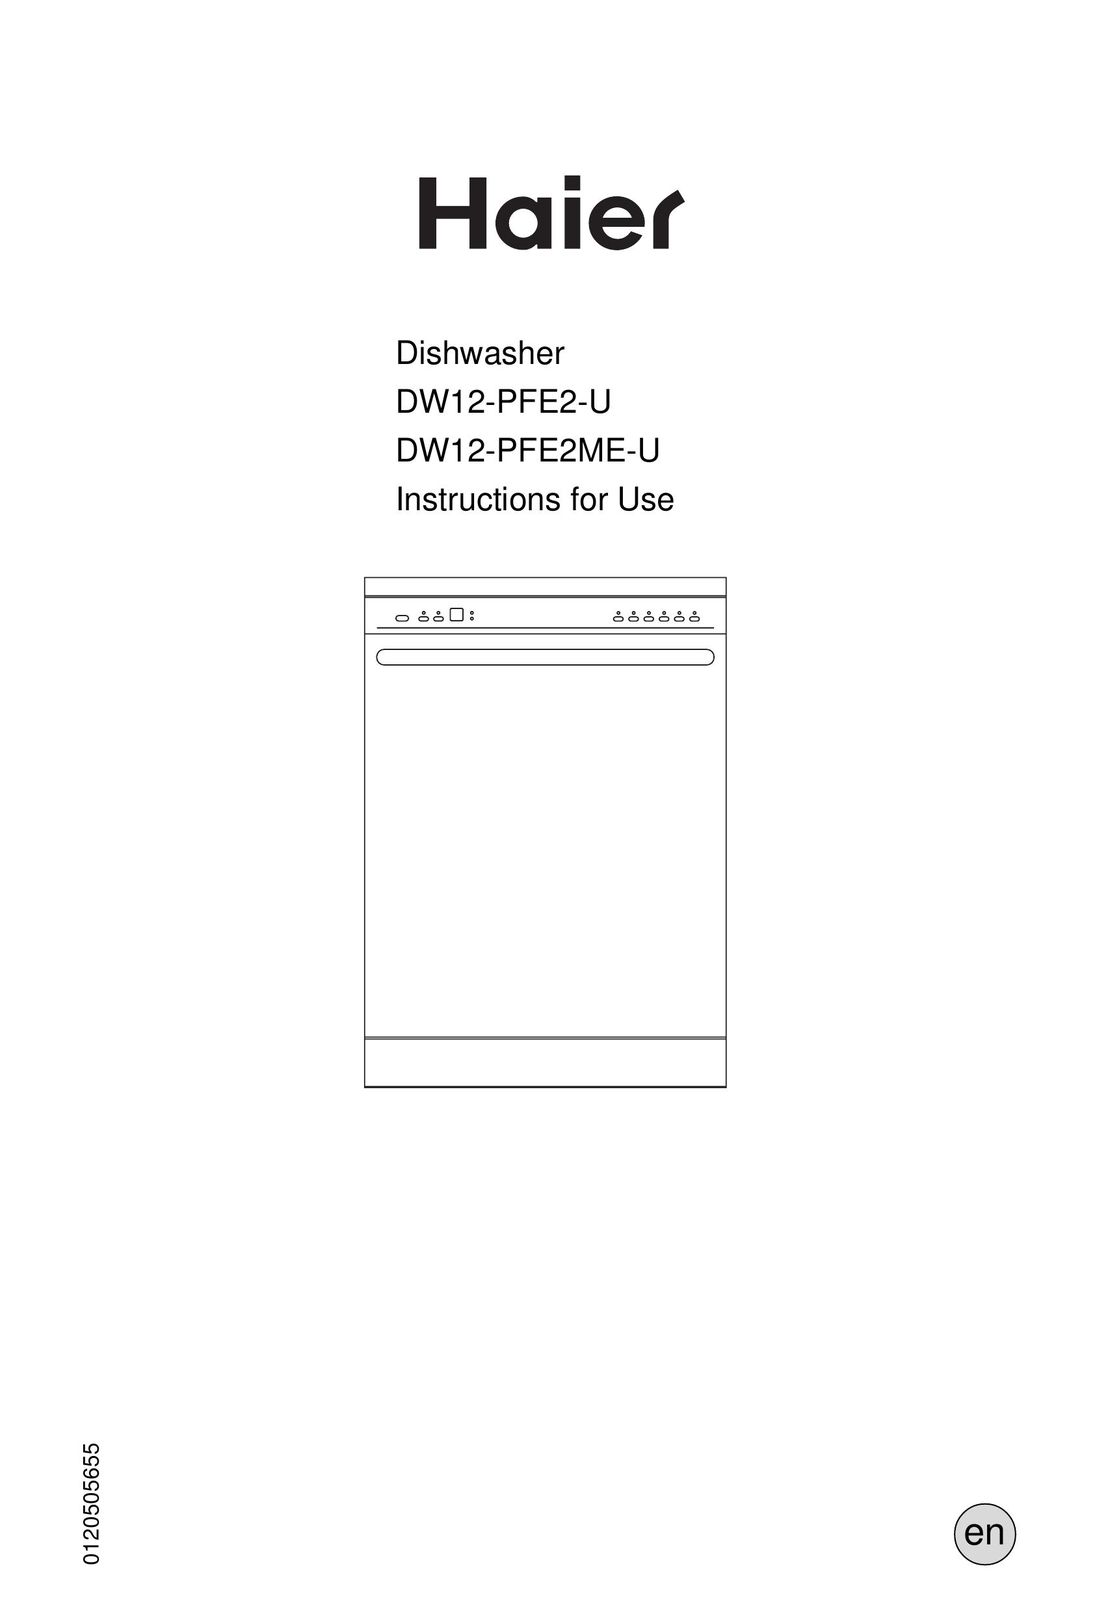 Haier DW12-PFE2ME-U Dishwasher User Manual